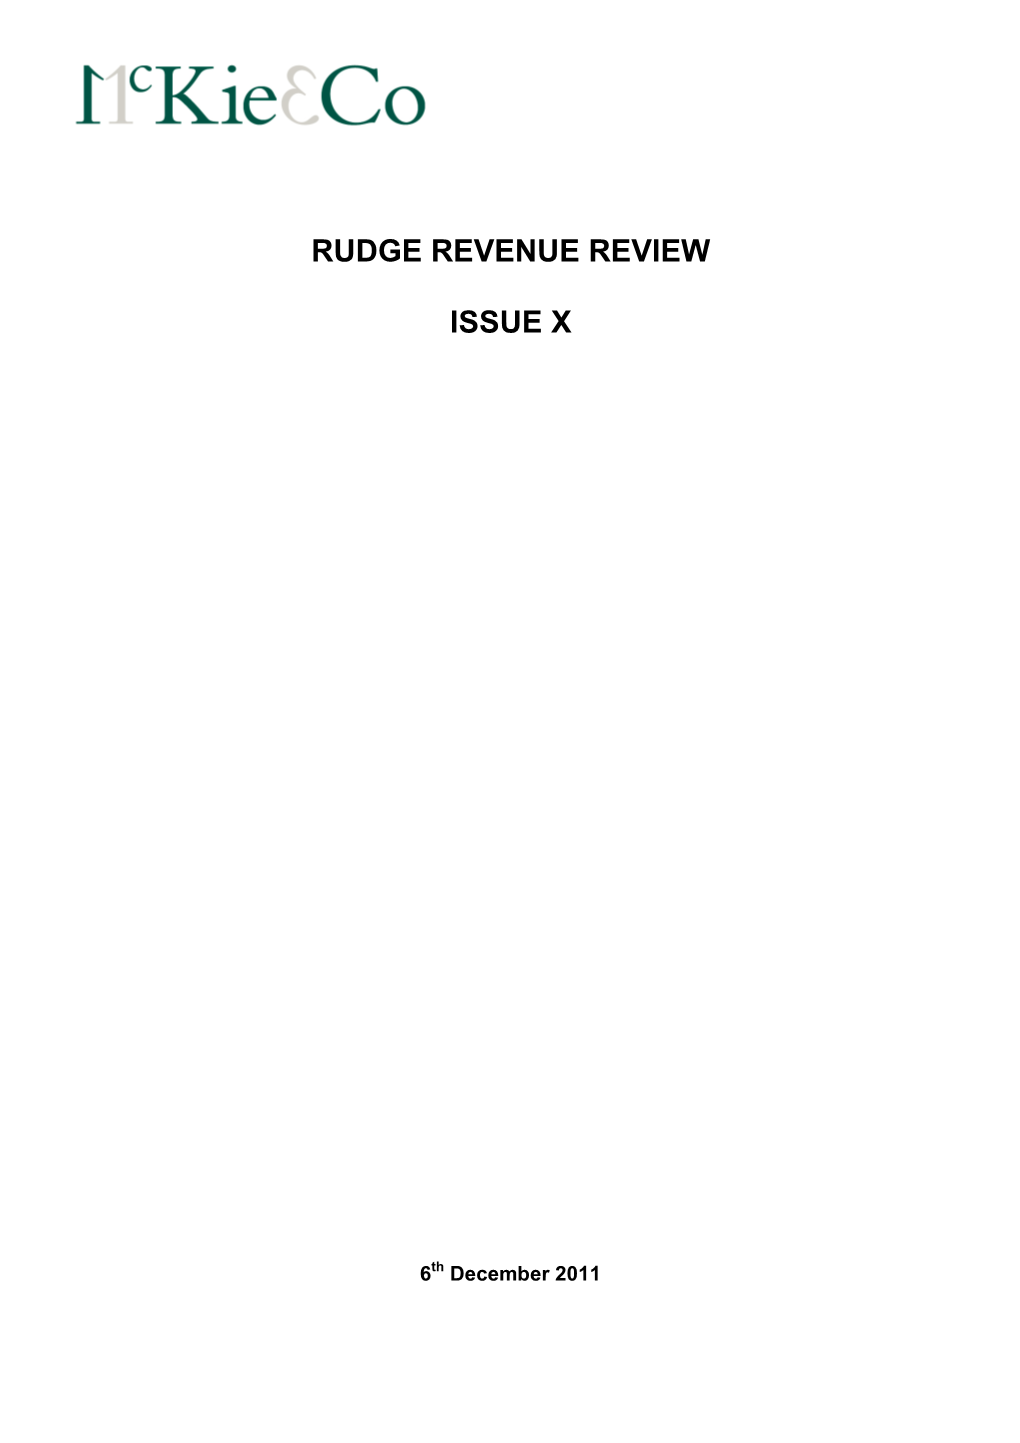 Rudge Revenue Review Issue X